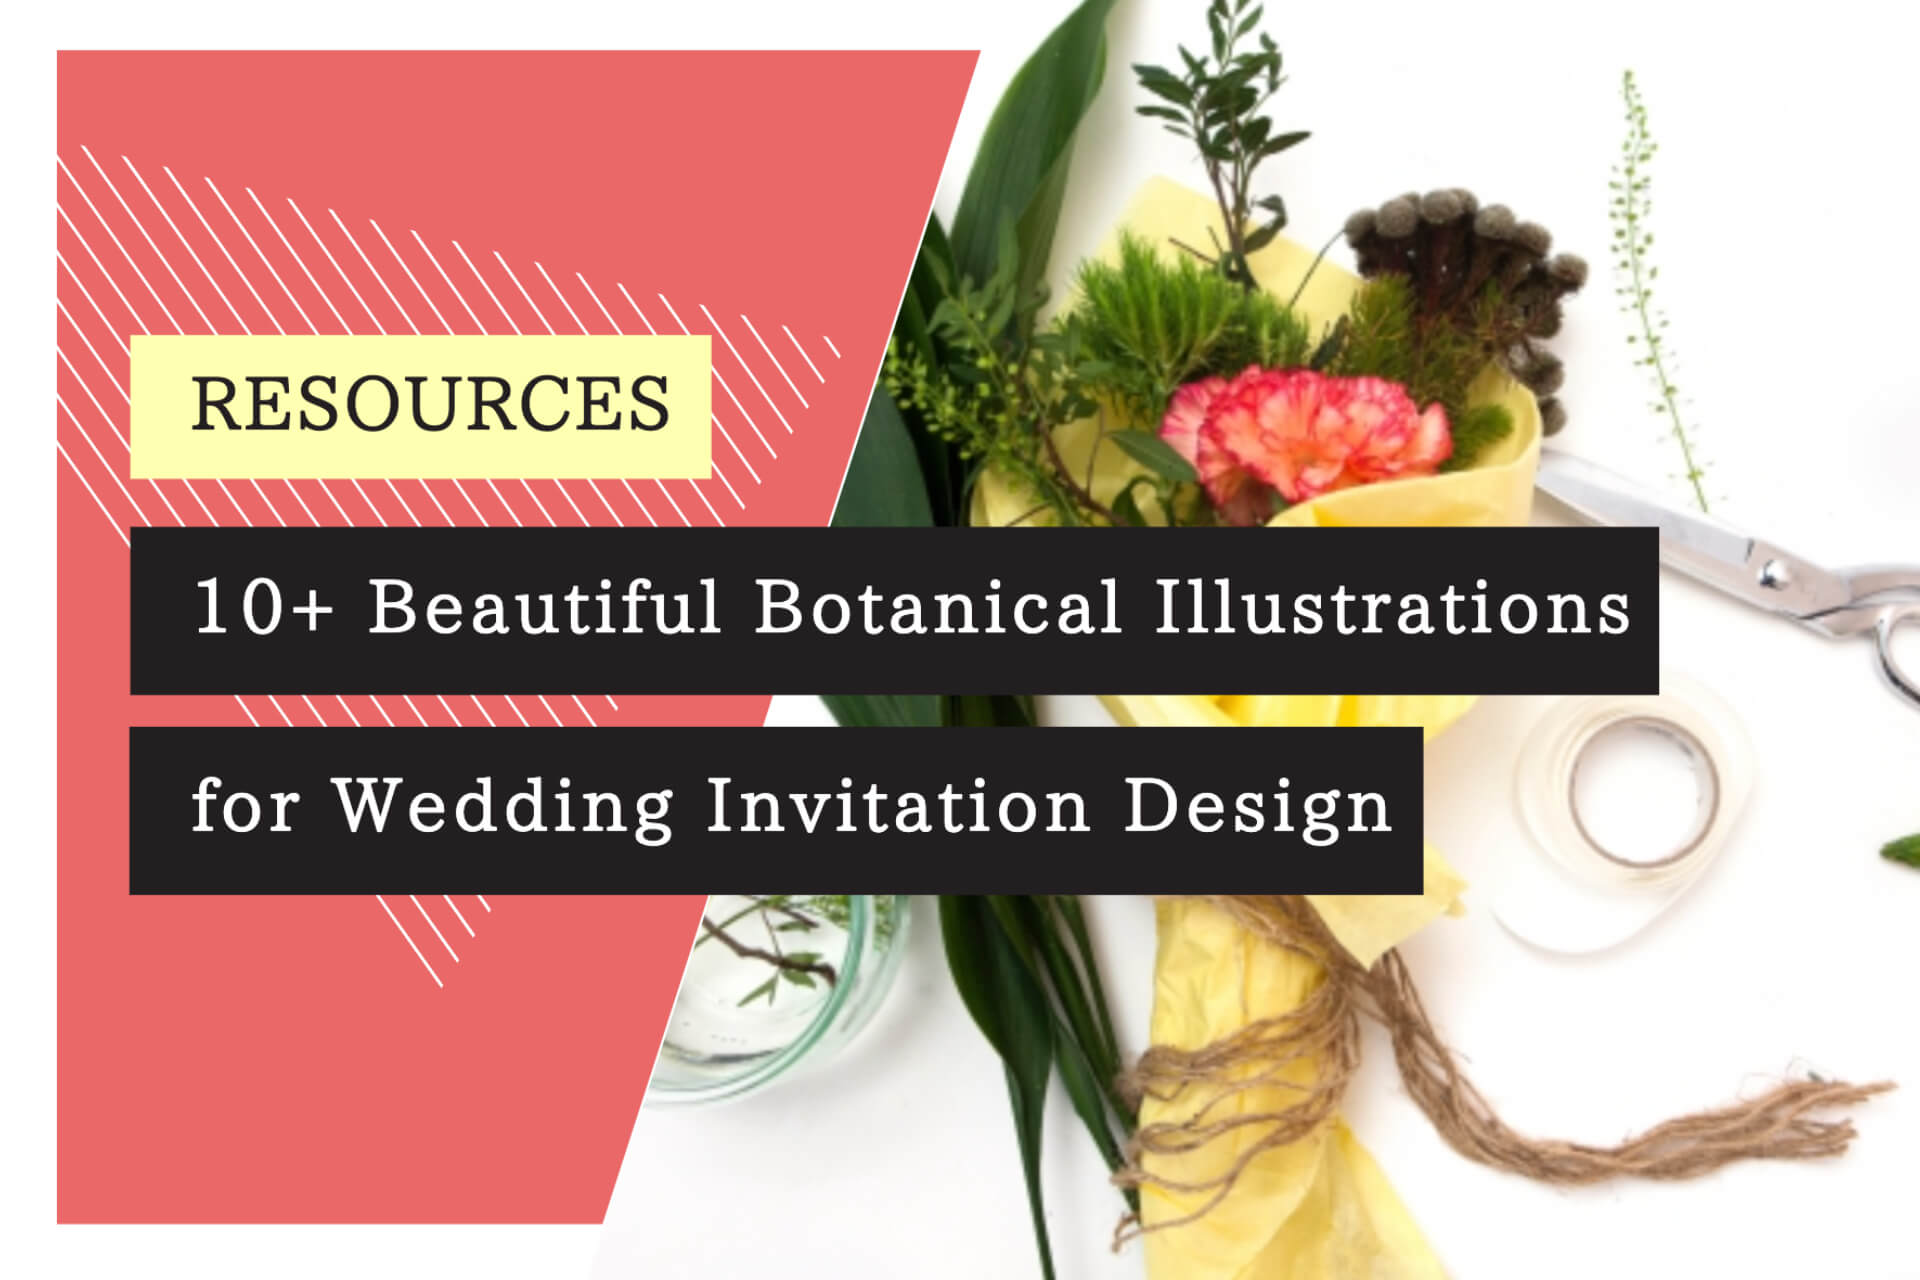 10+ Beautiful Botanical Illustrations for Wedding Invitation Design